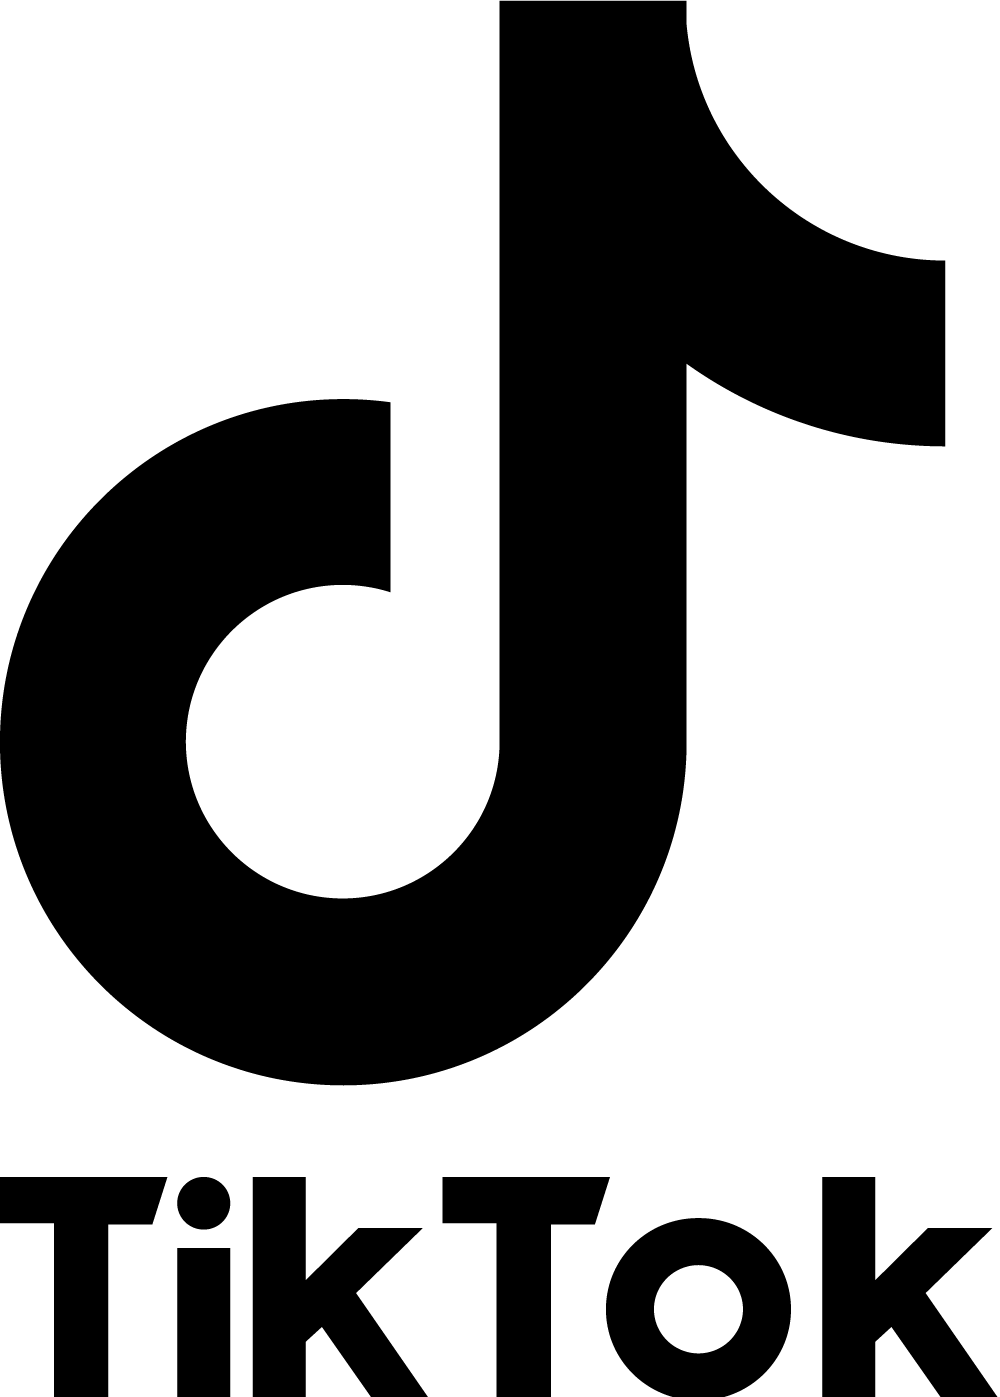 the tiktok logo